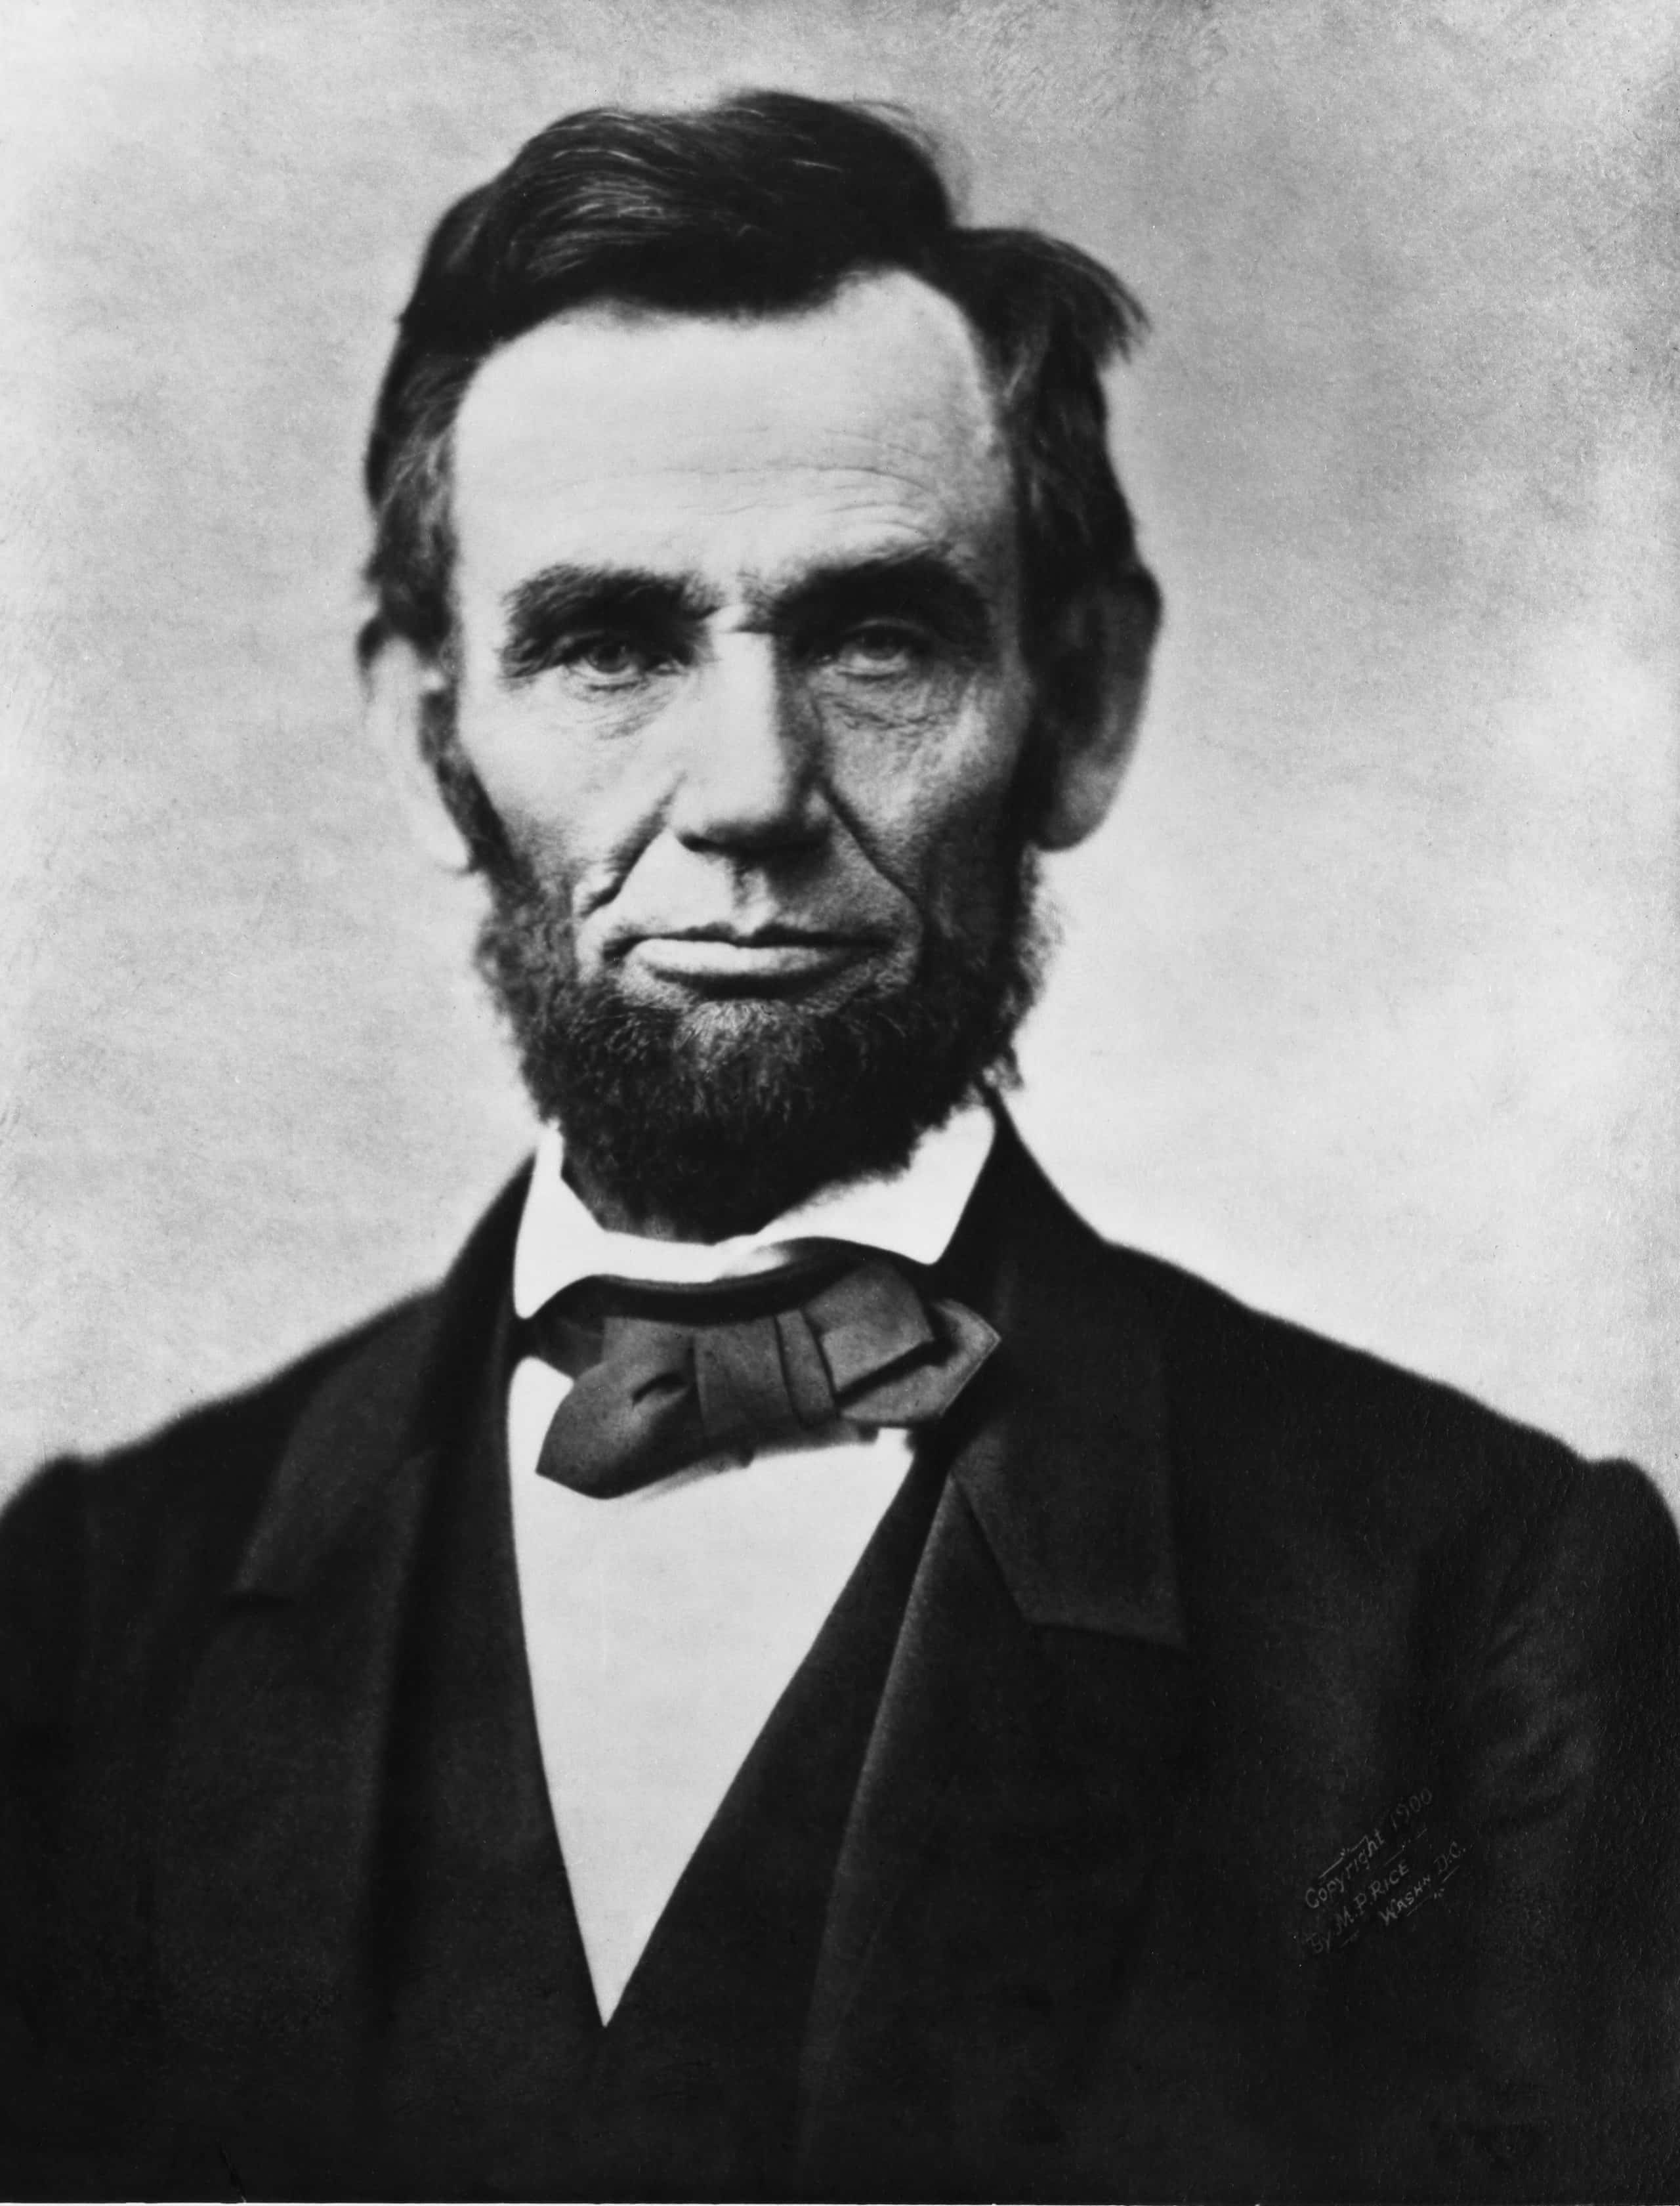 Abraham_Lincoln_head_on_shoulders_photo_portrait